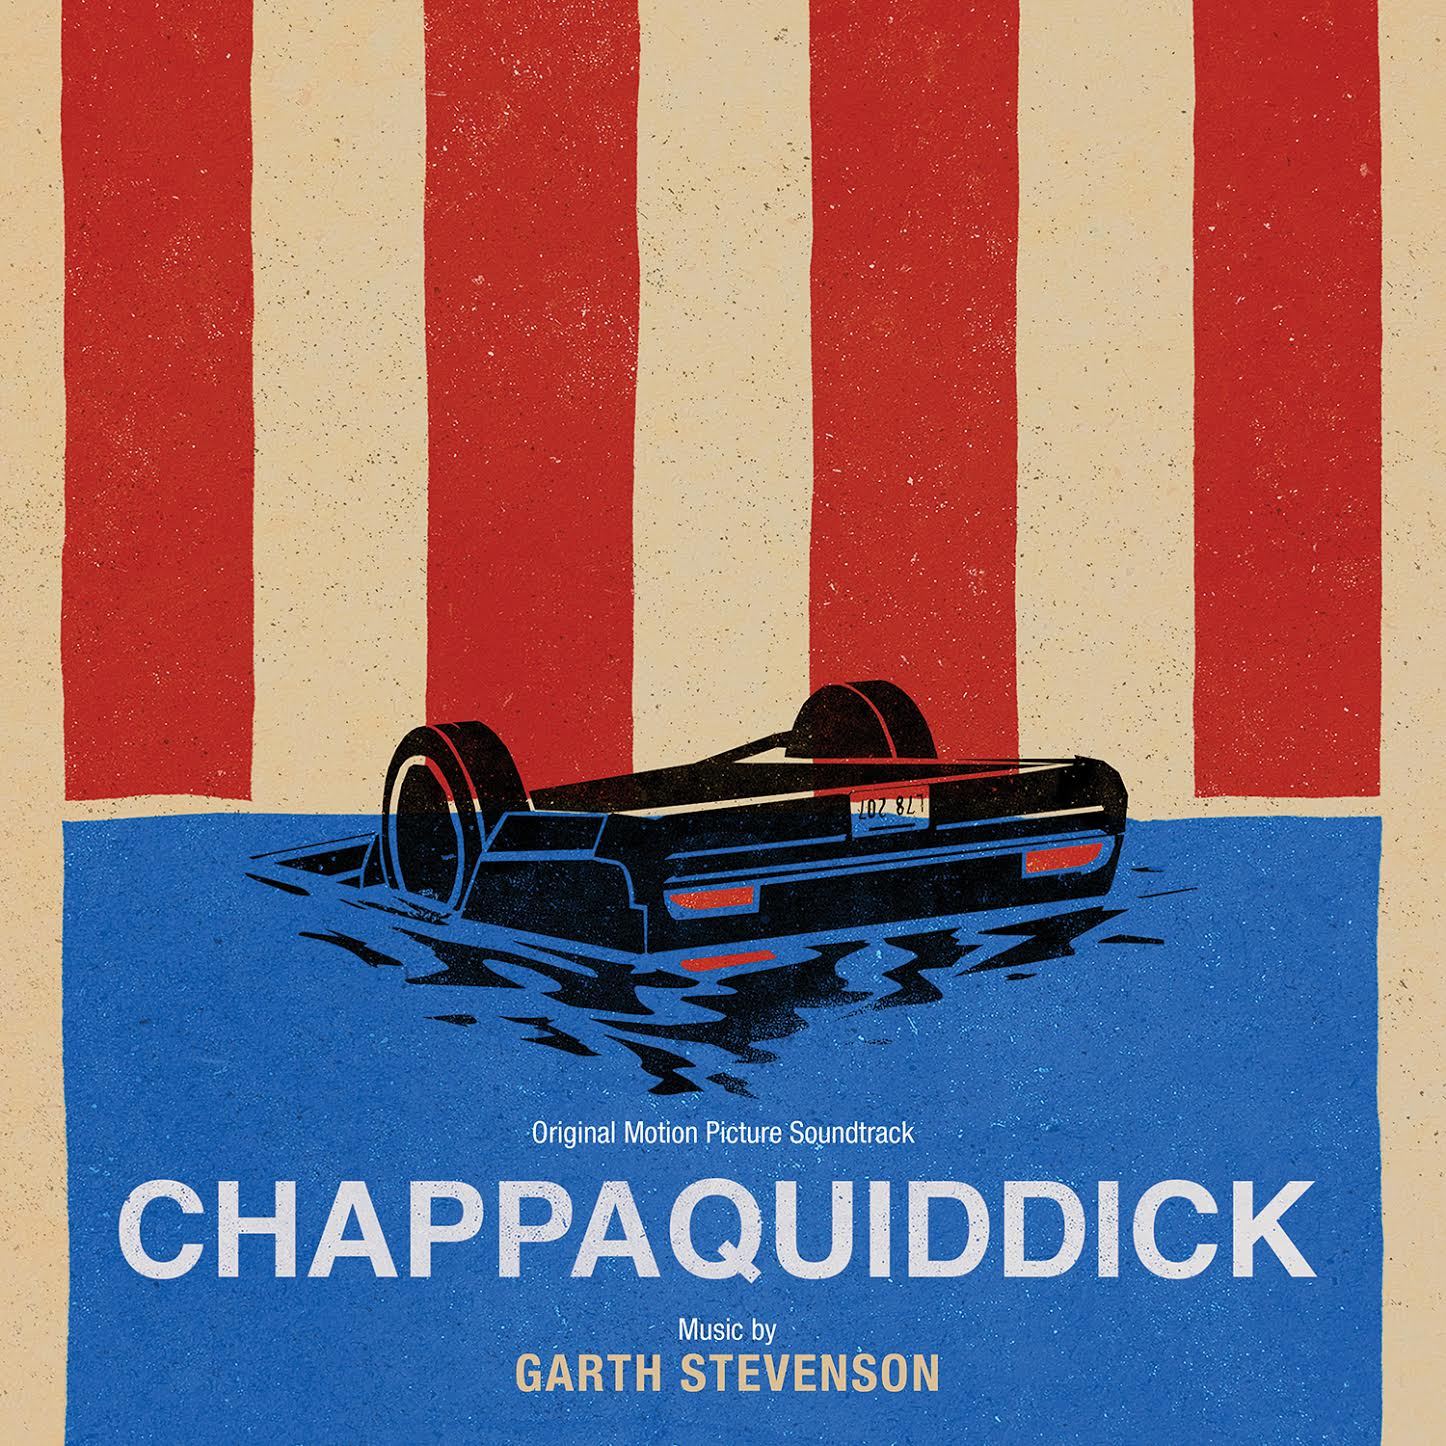 Chappaquiddick (Garth Stevenson)